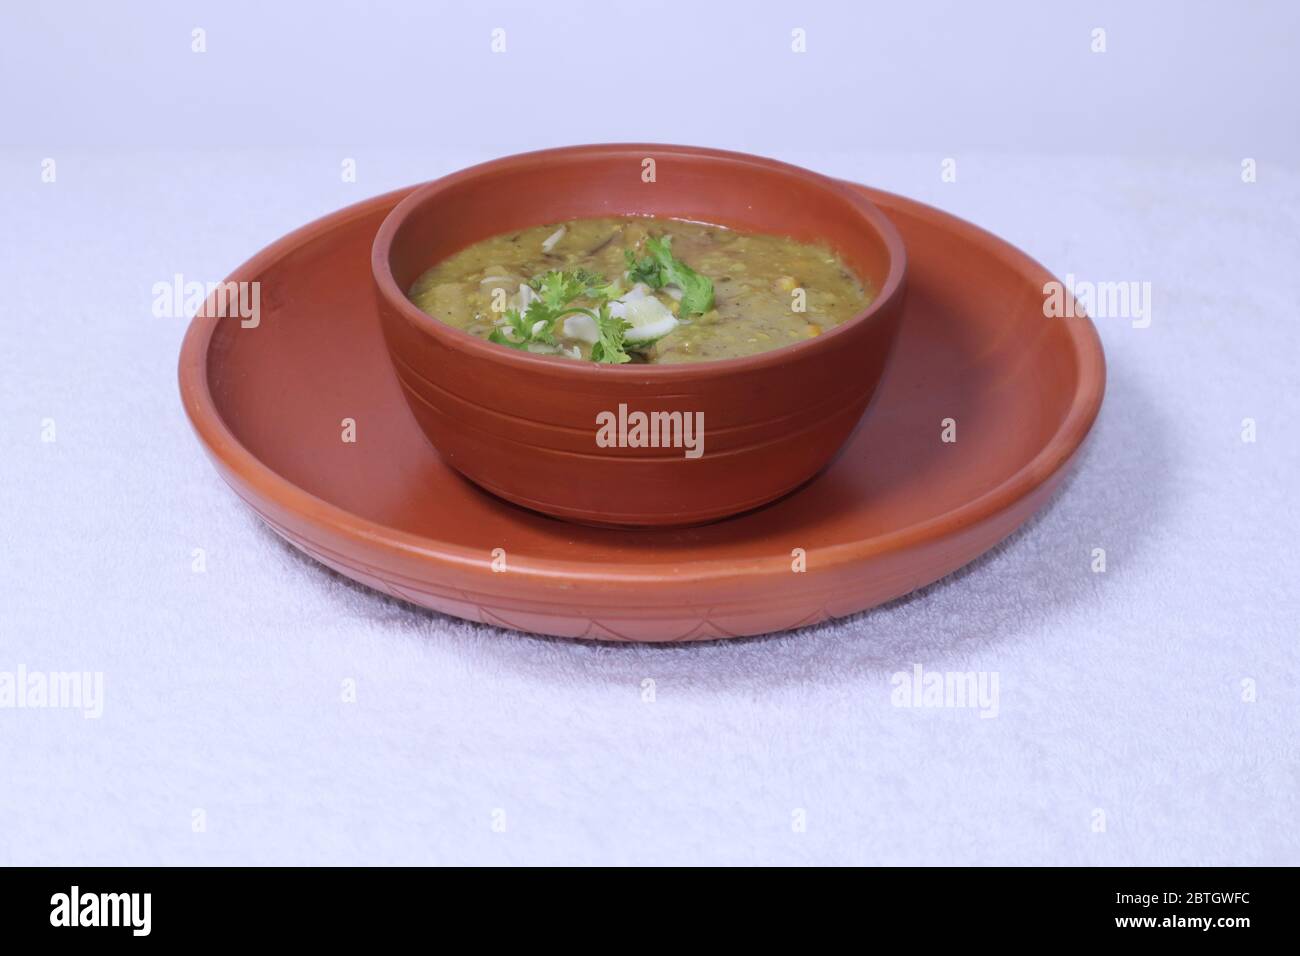 Halim food in an earthenware pot Stock Photo